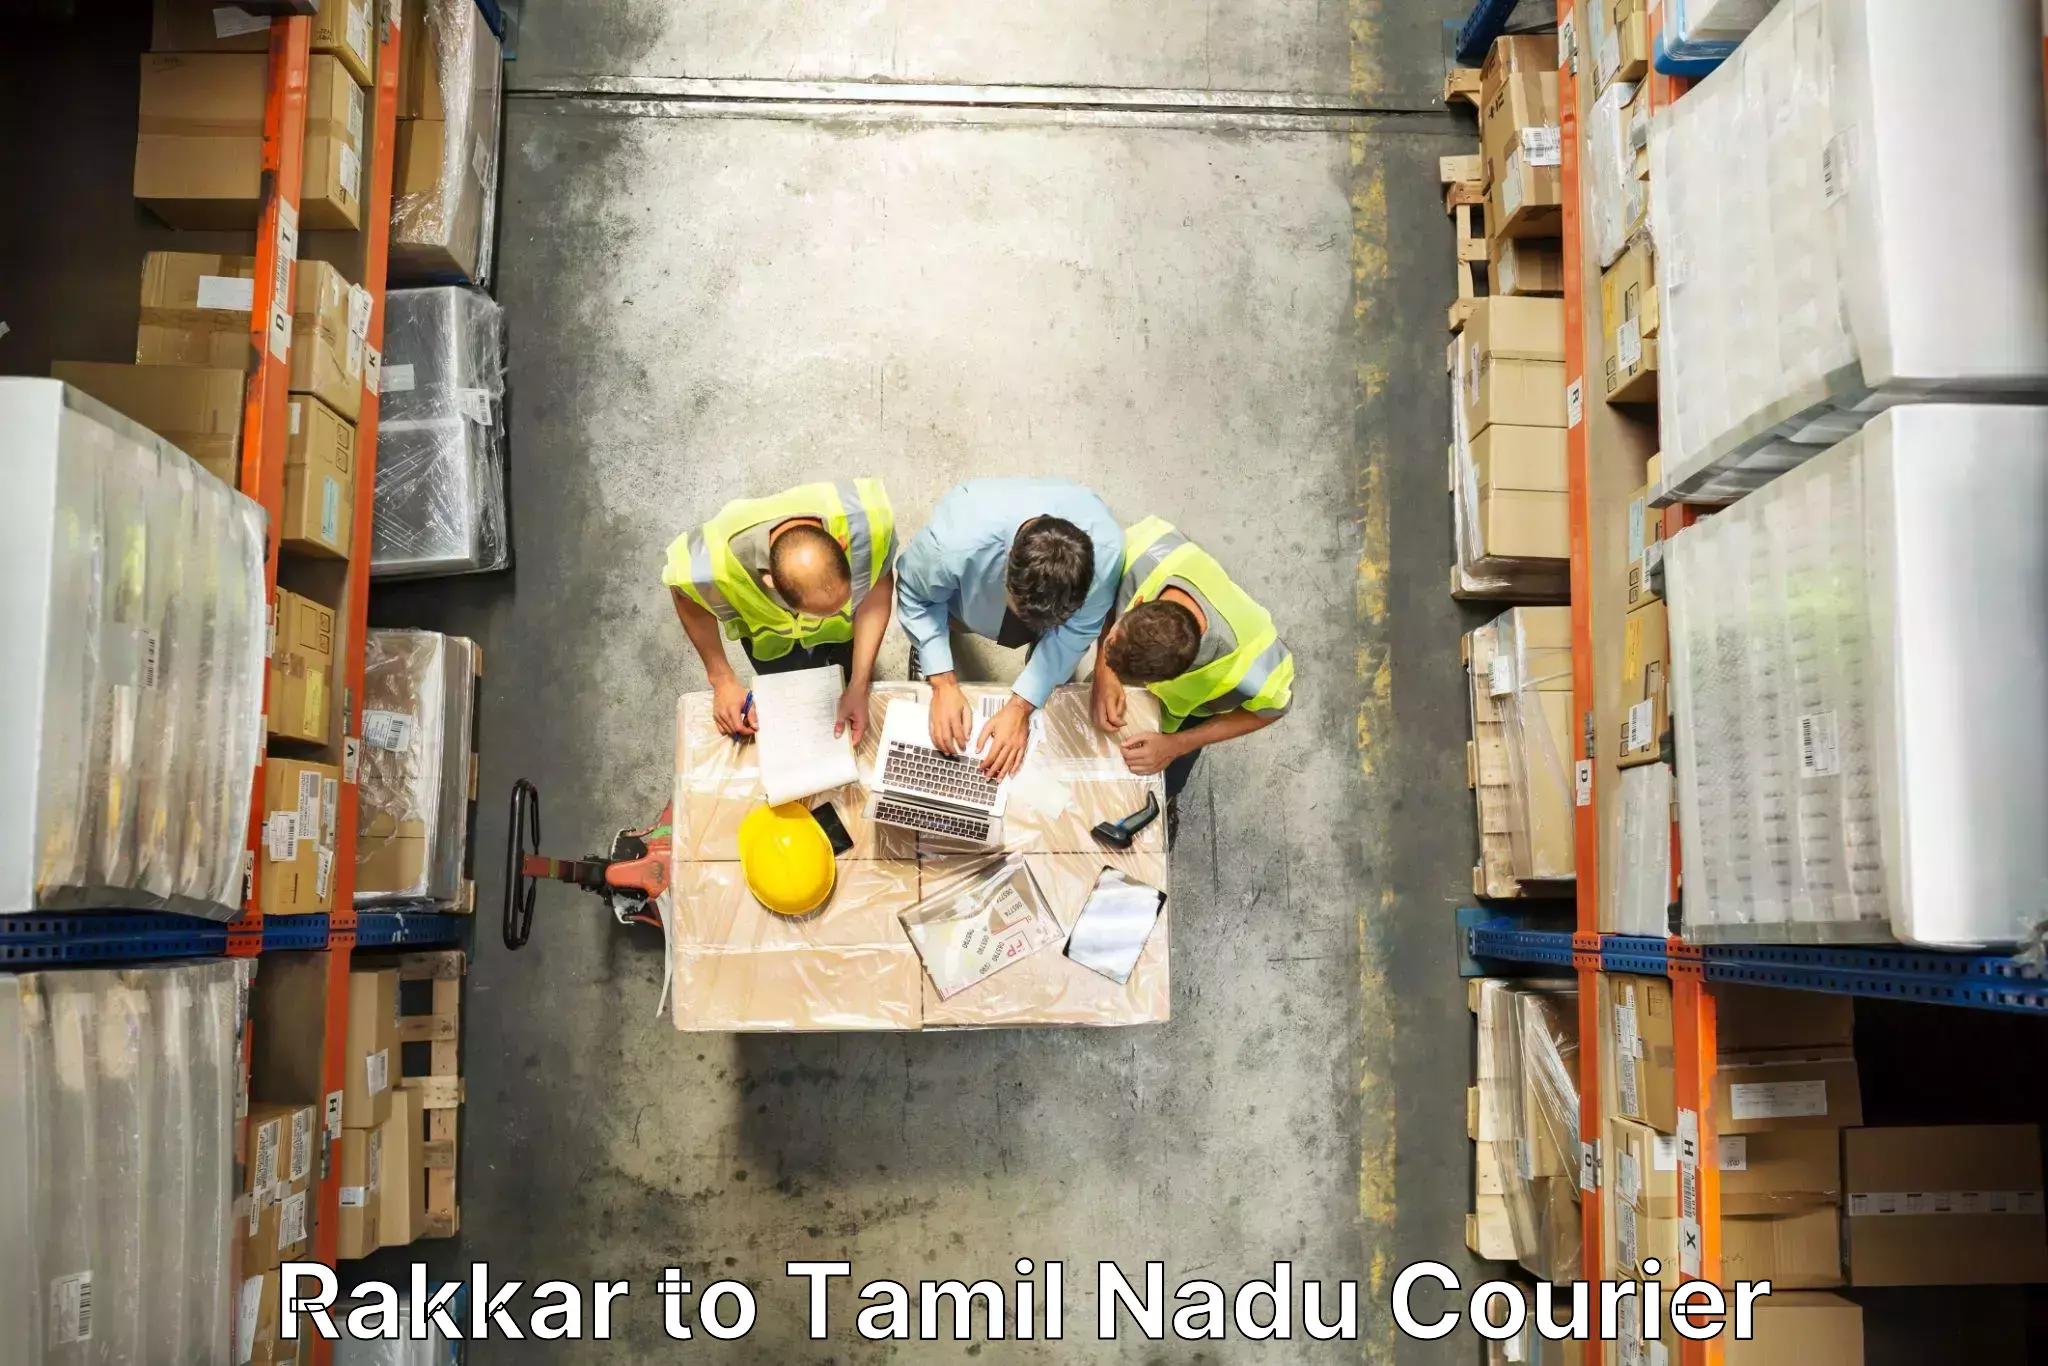 Efficient moving company Rakkar to Thiruvadanai